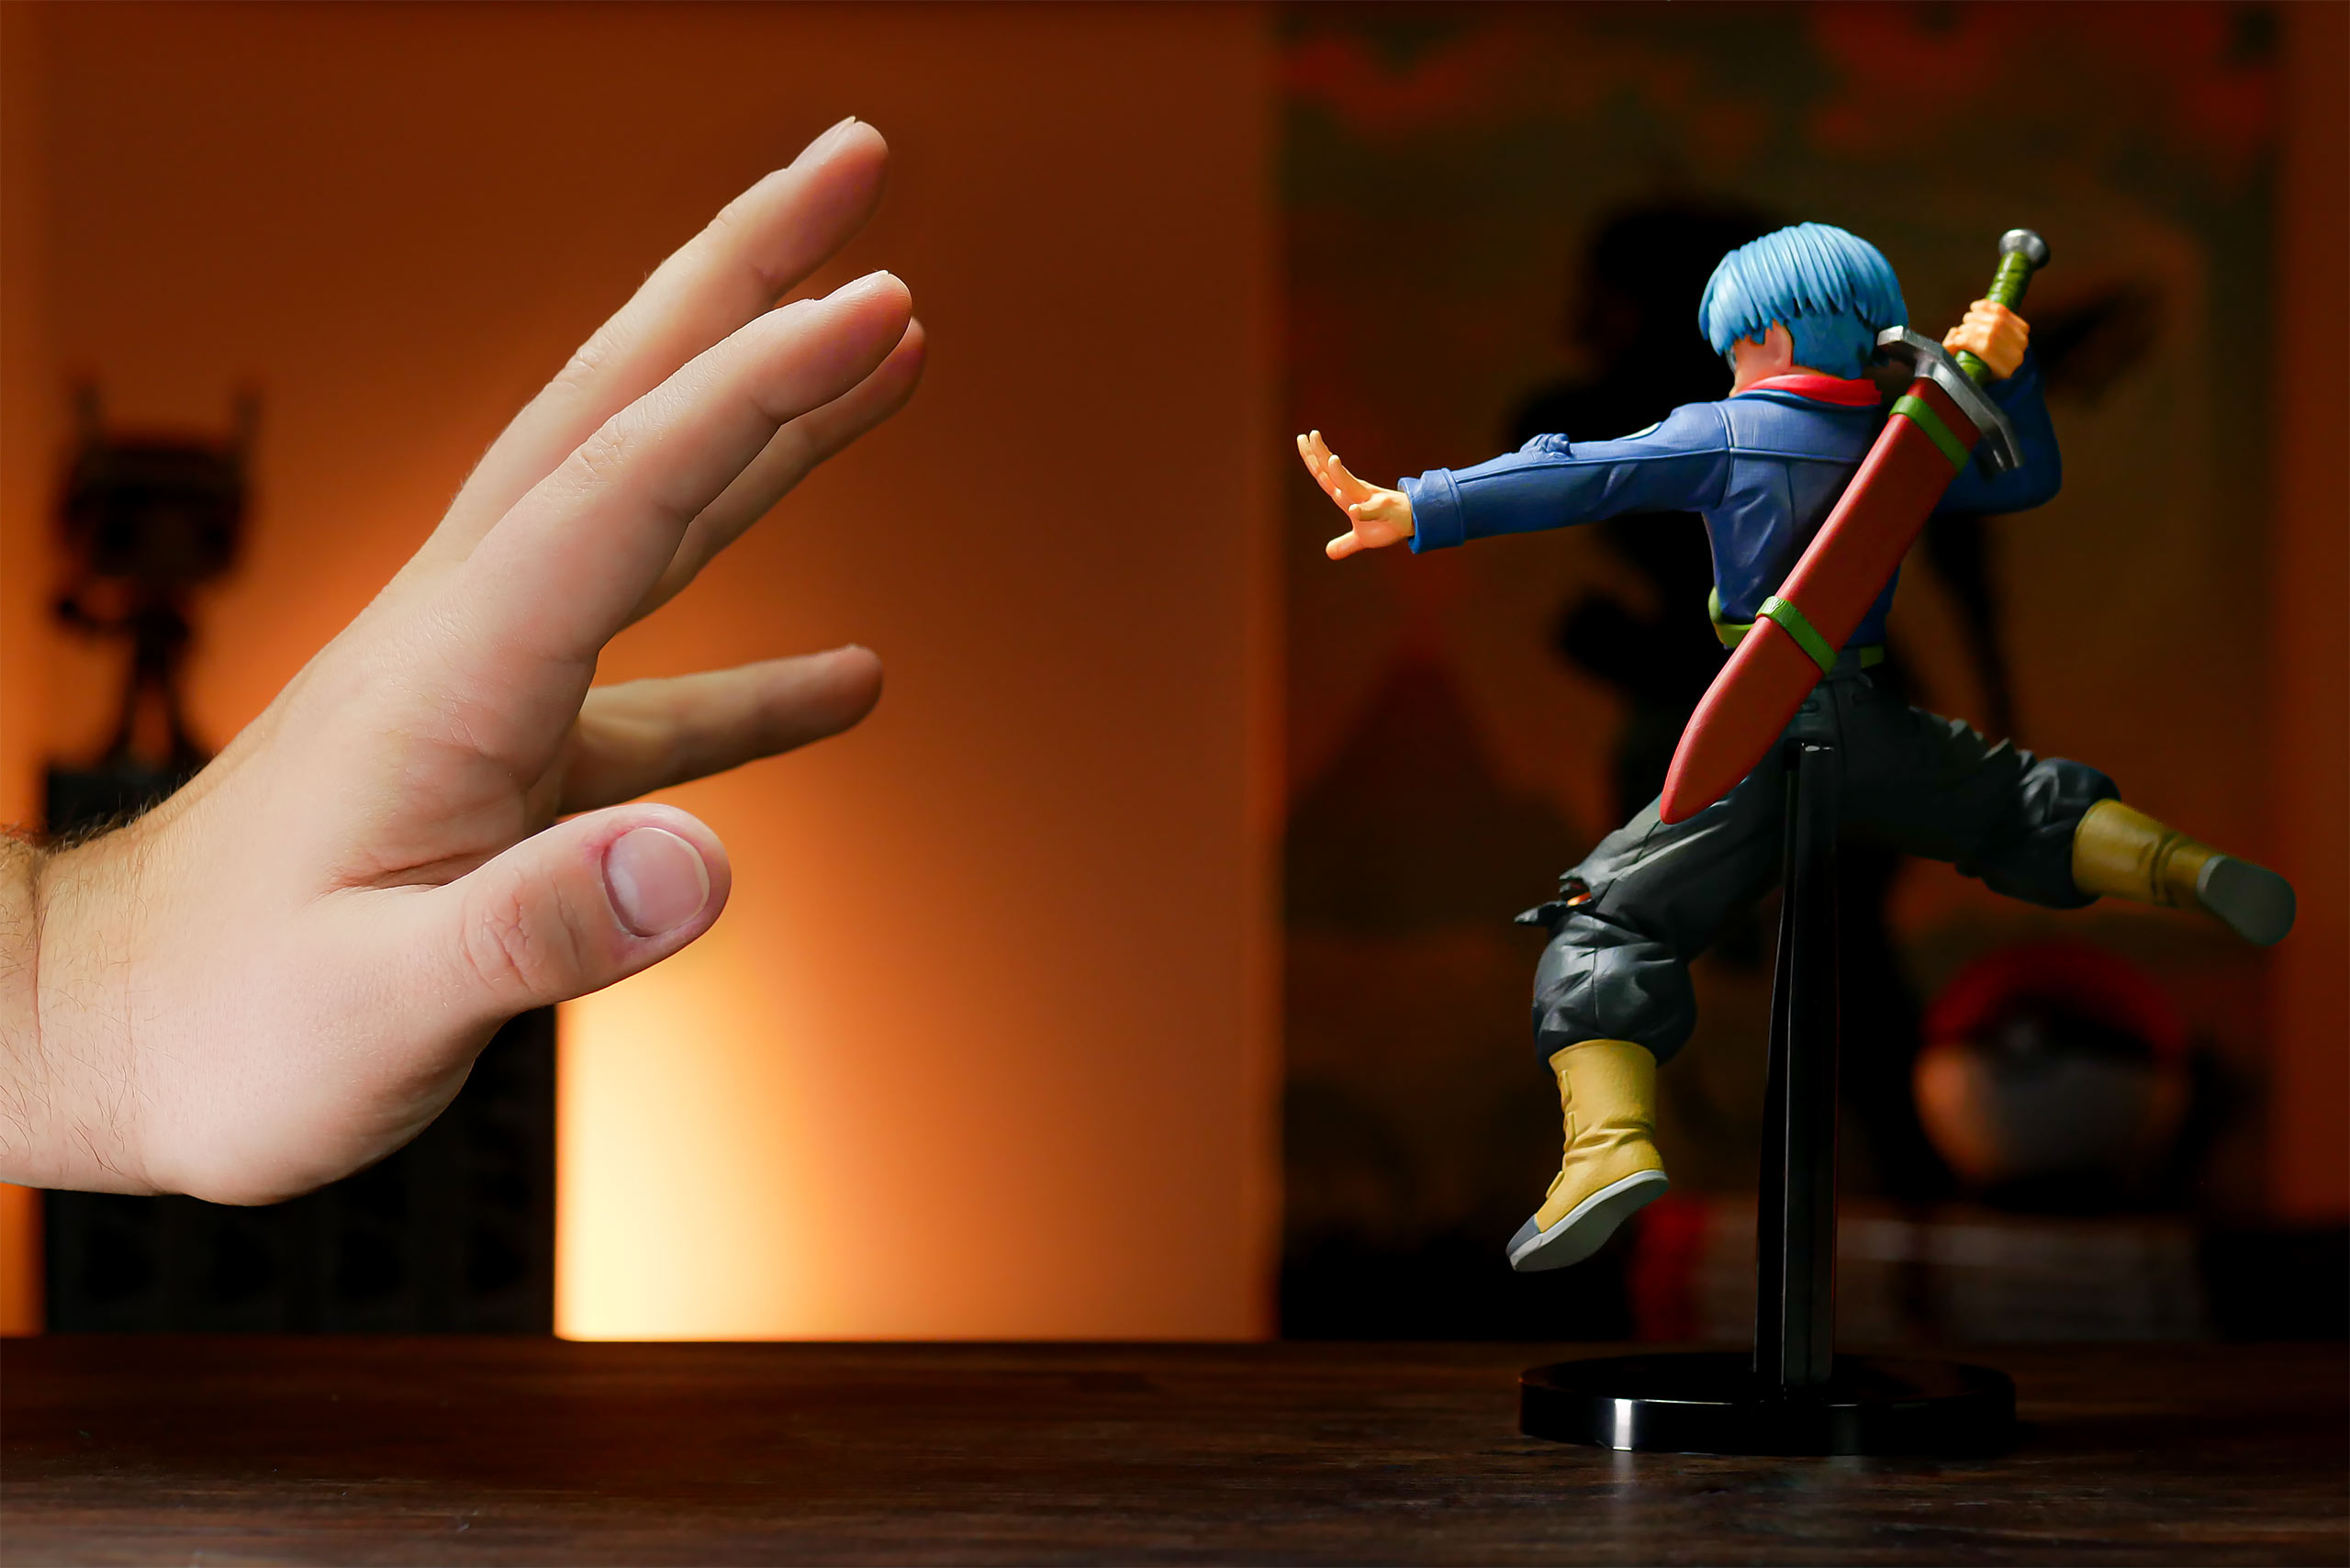 Dragon Ball Super - Trunks Figur 19,5 cm